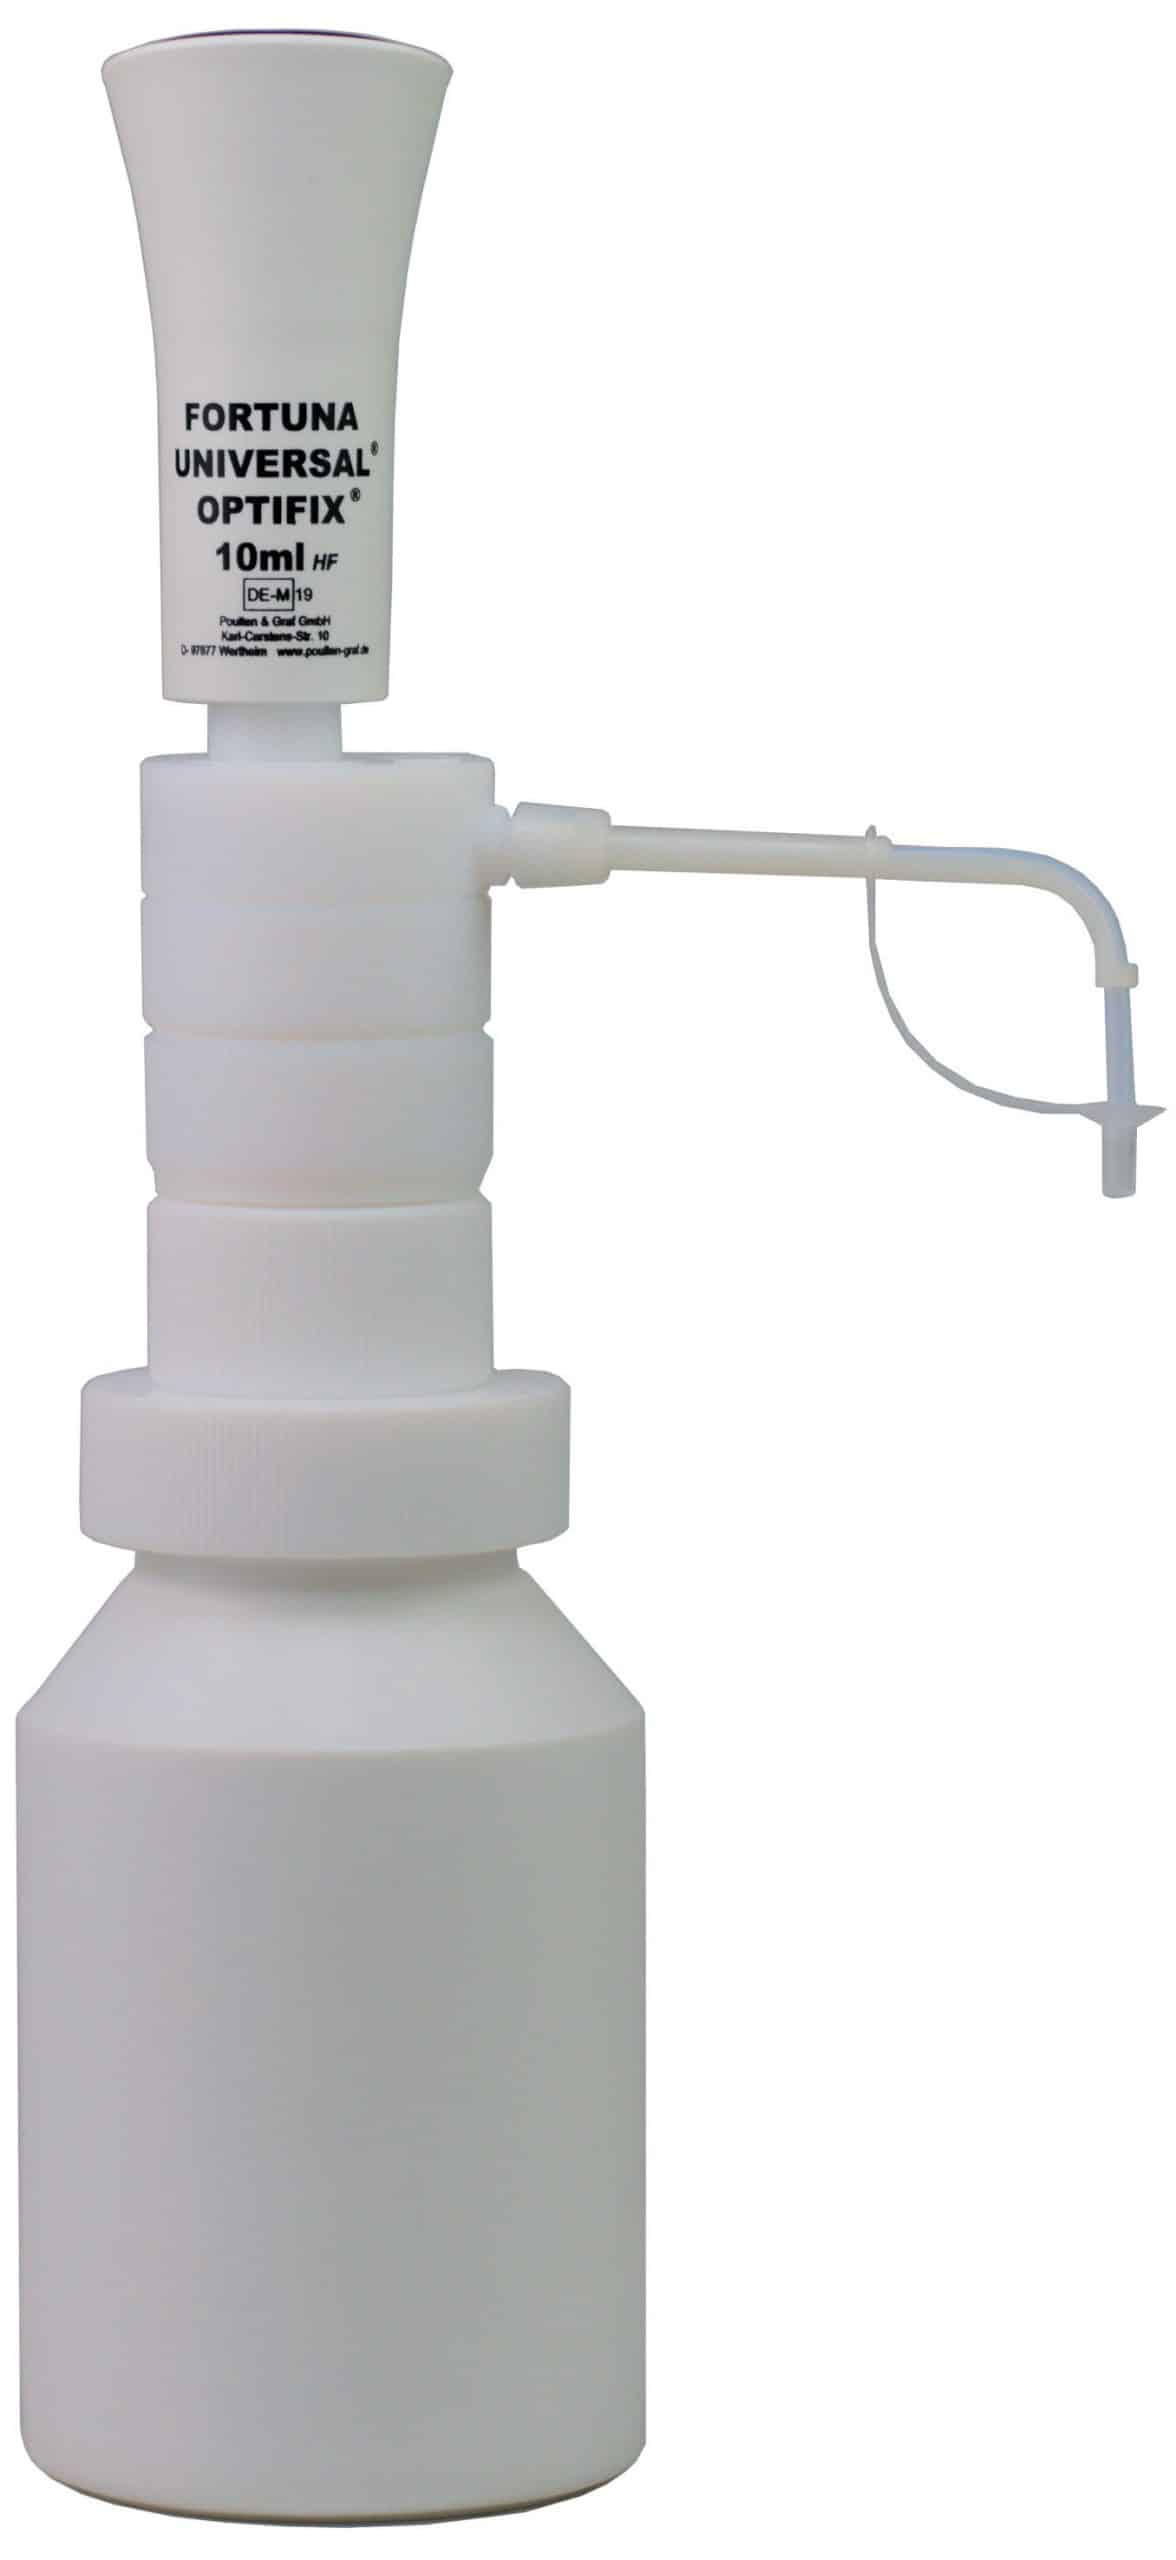 FORTUNA Bottle Top Dispenser(Germany), Universal & for Hydrofluoric Acid, 10-50ml